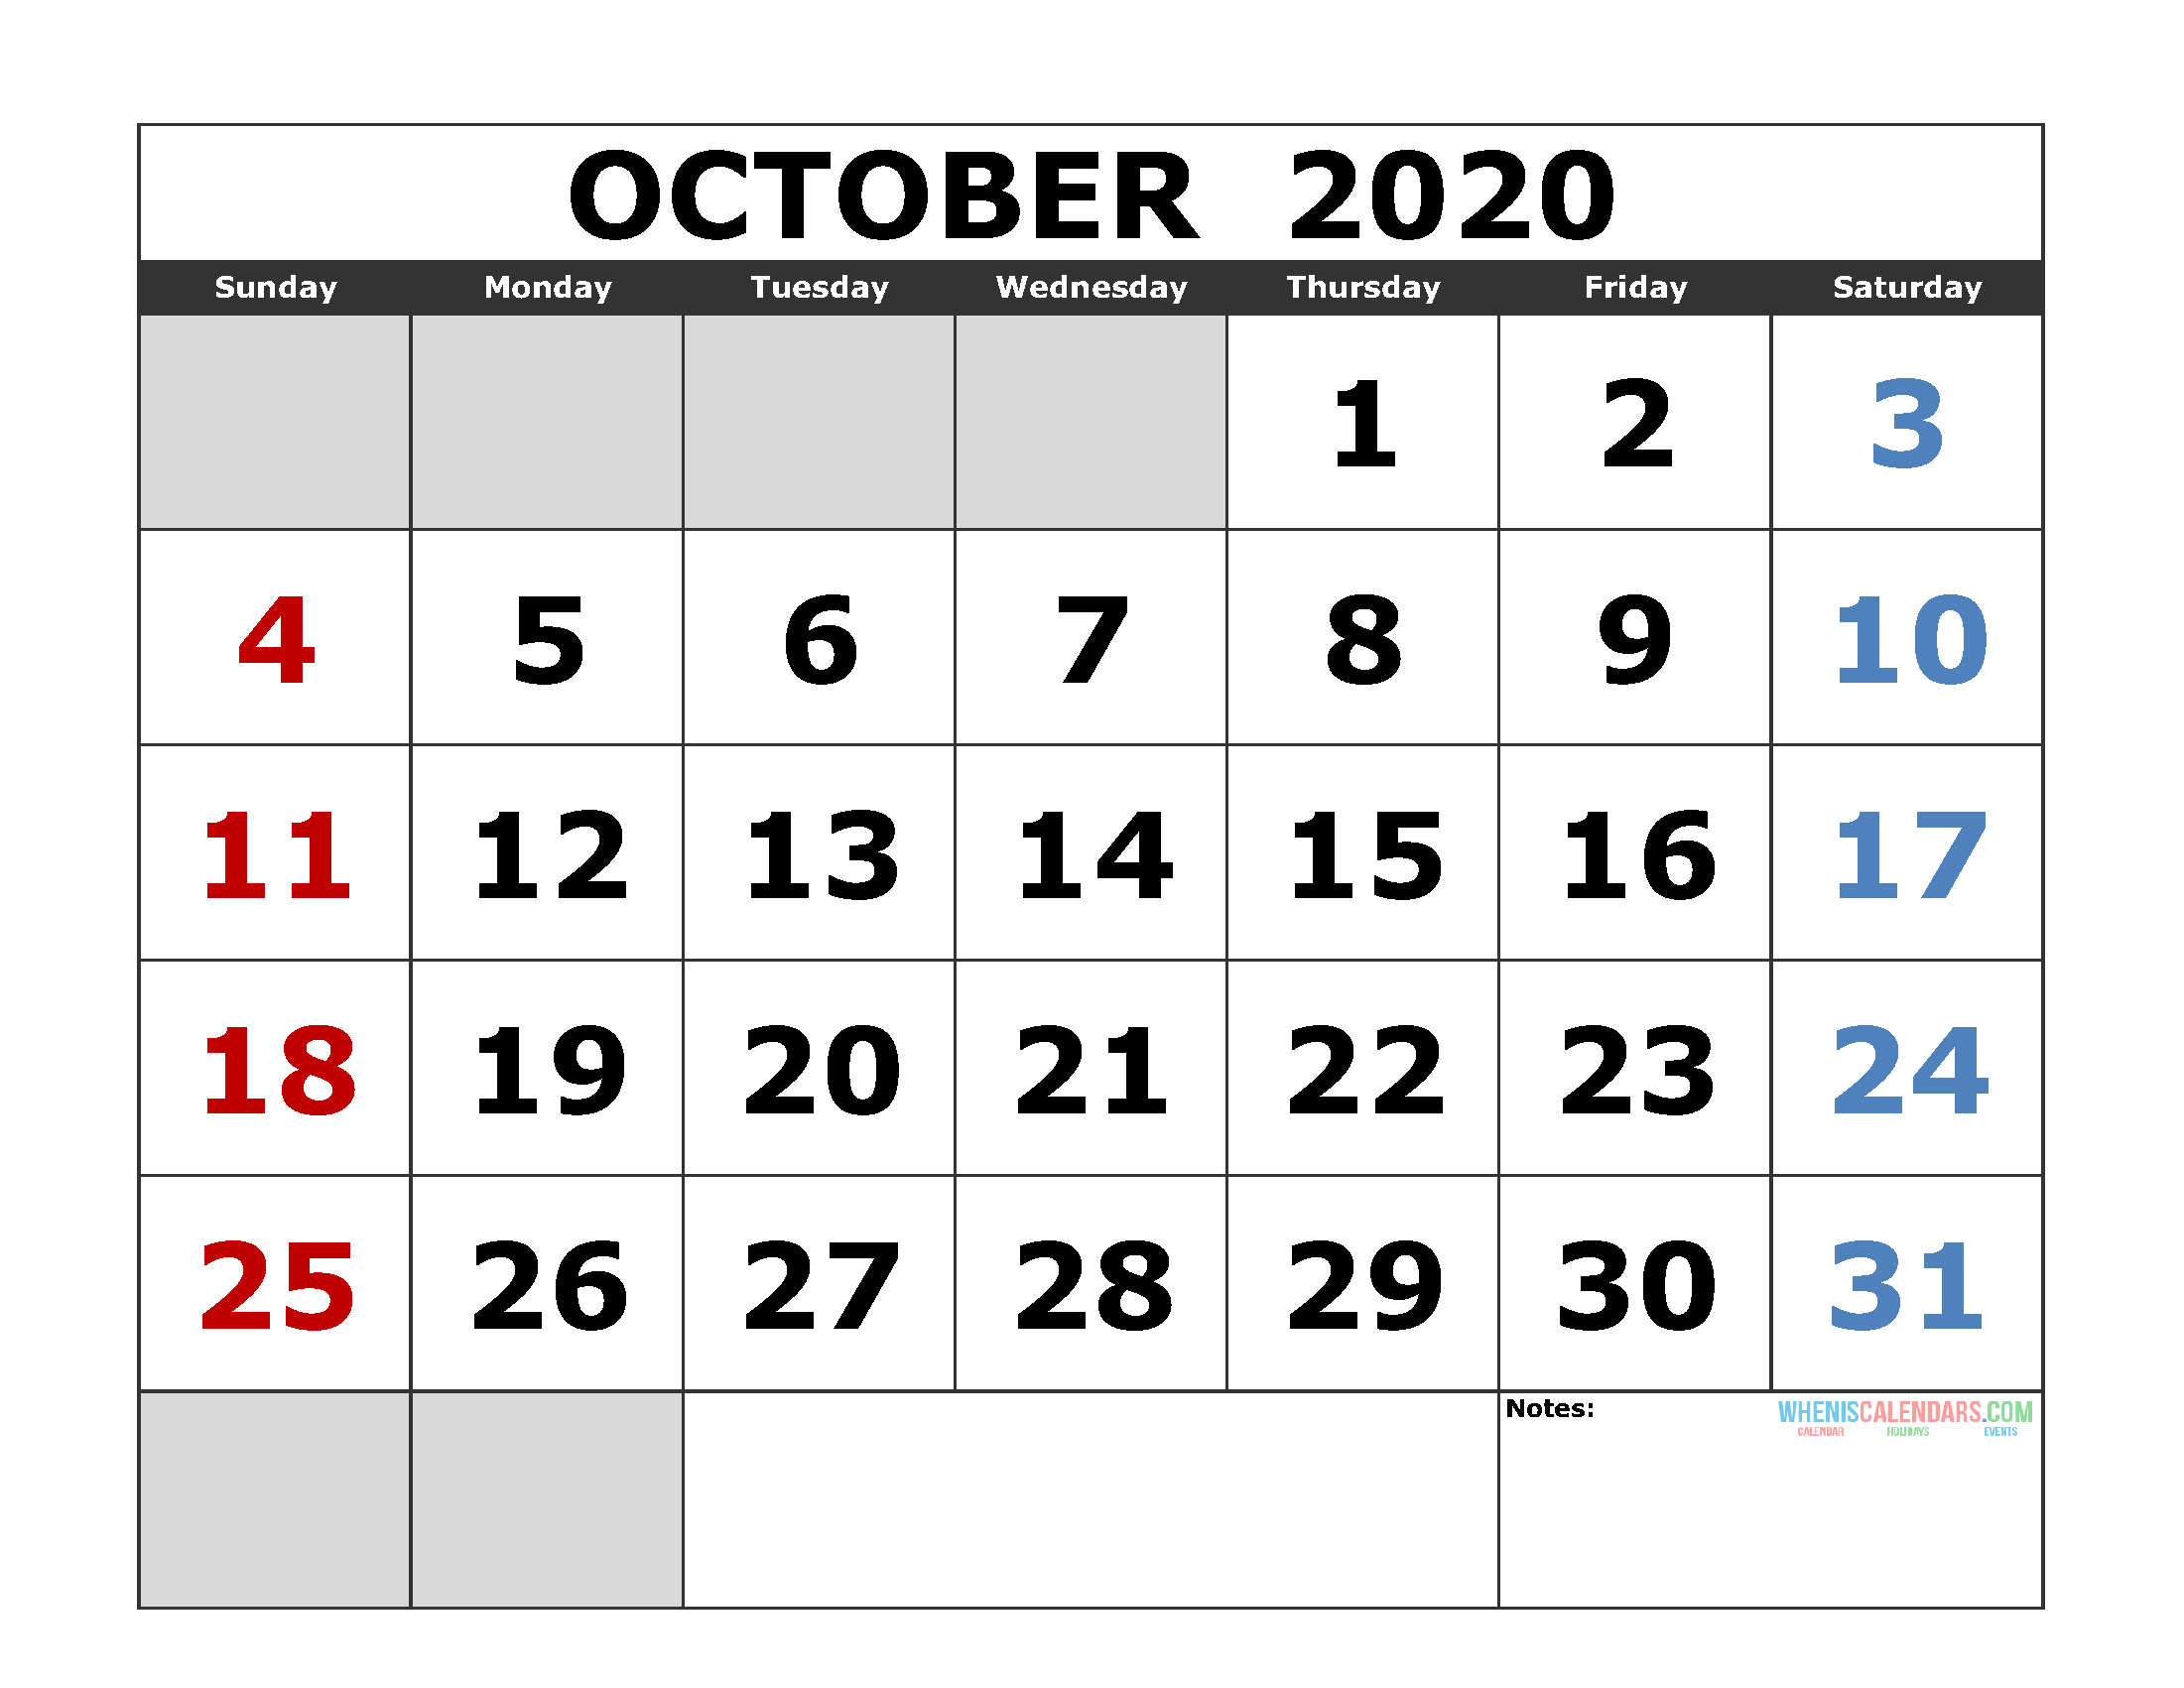 October 2020 Printable Calendar Template Excel, Pdf, Image